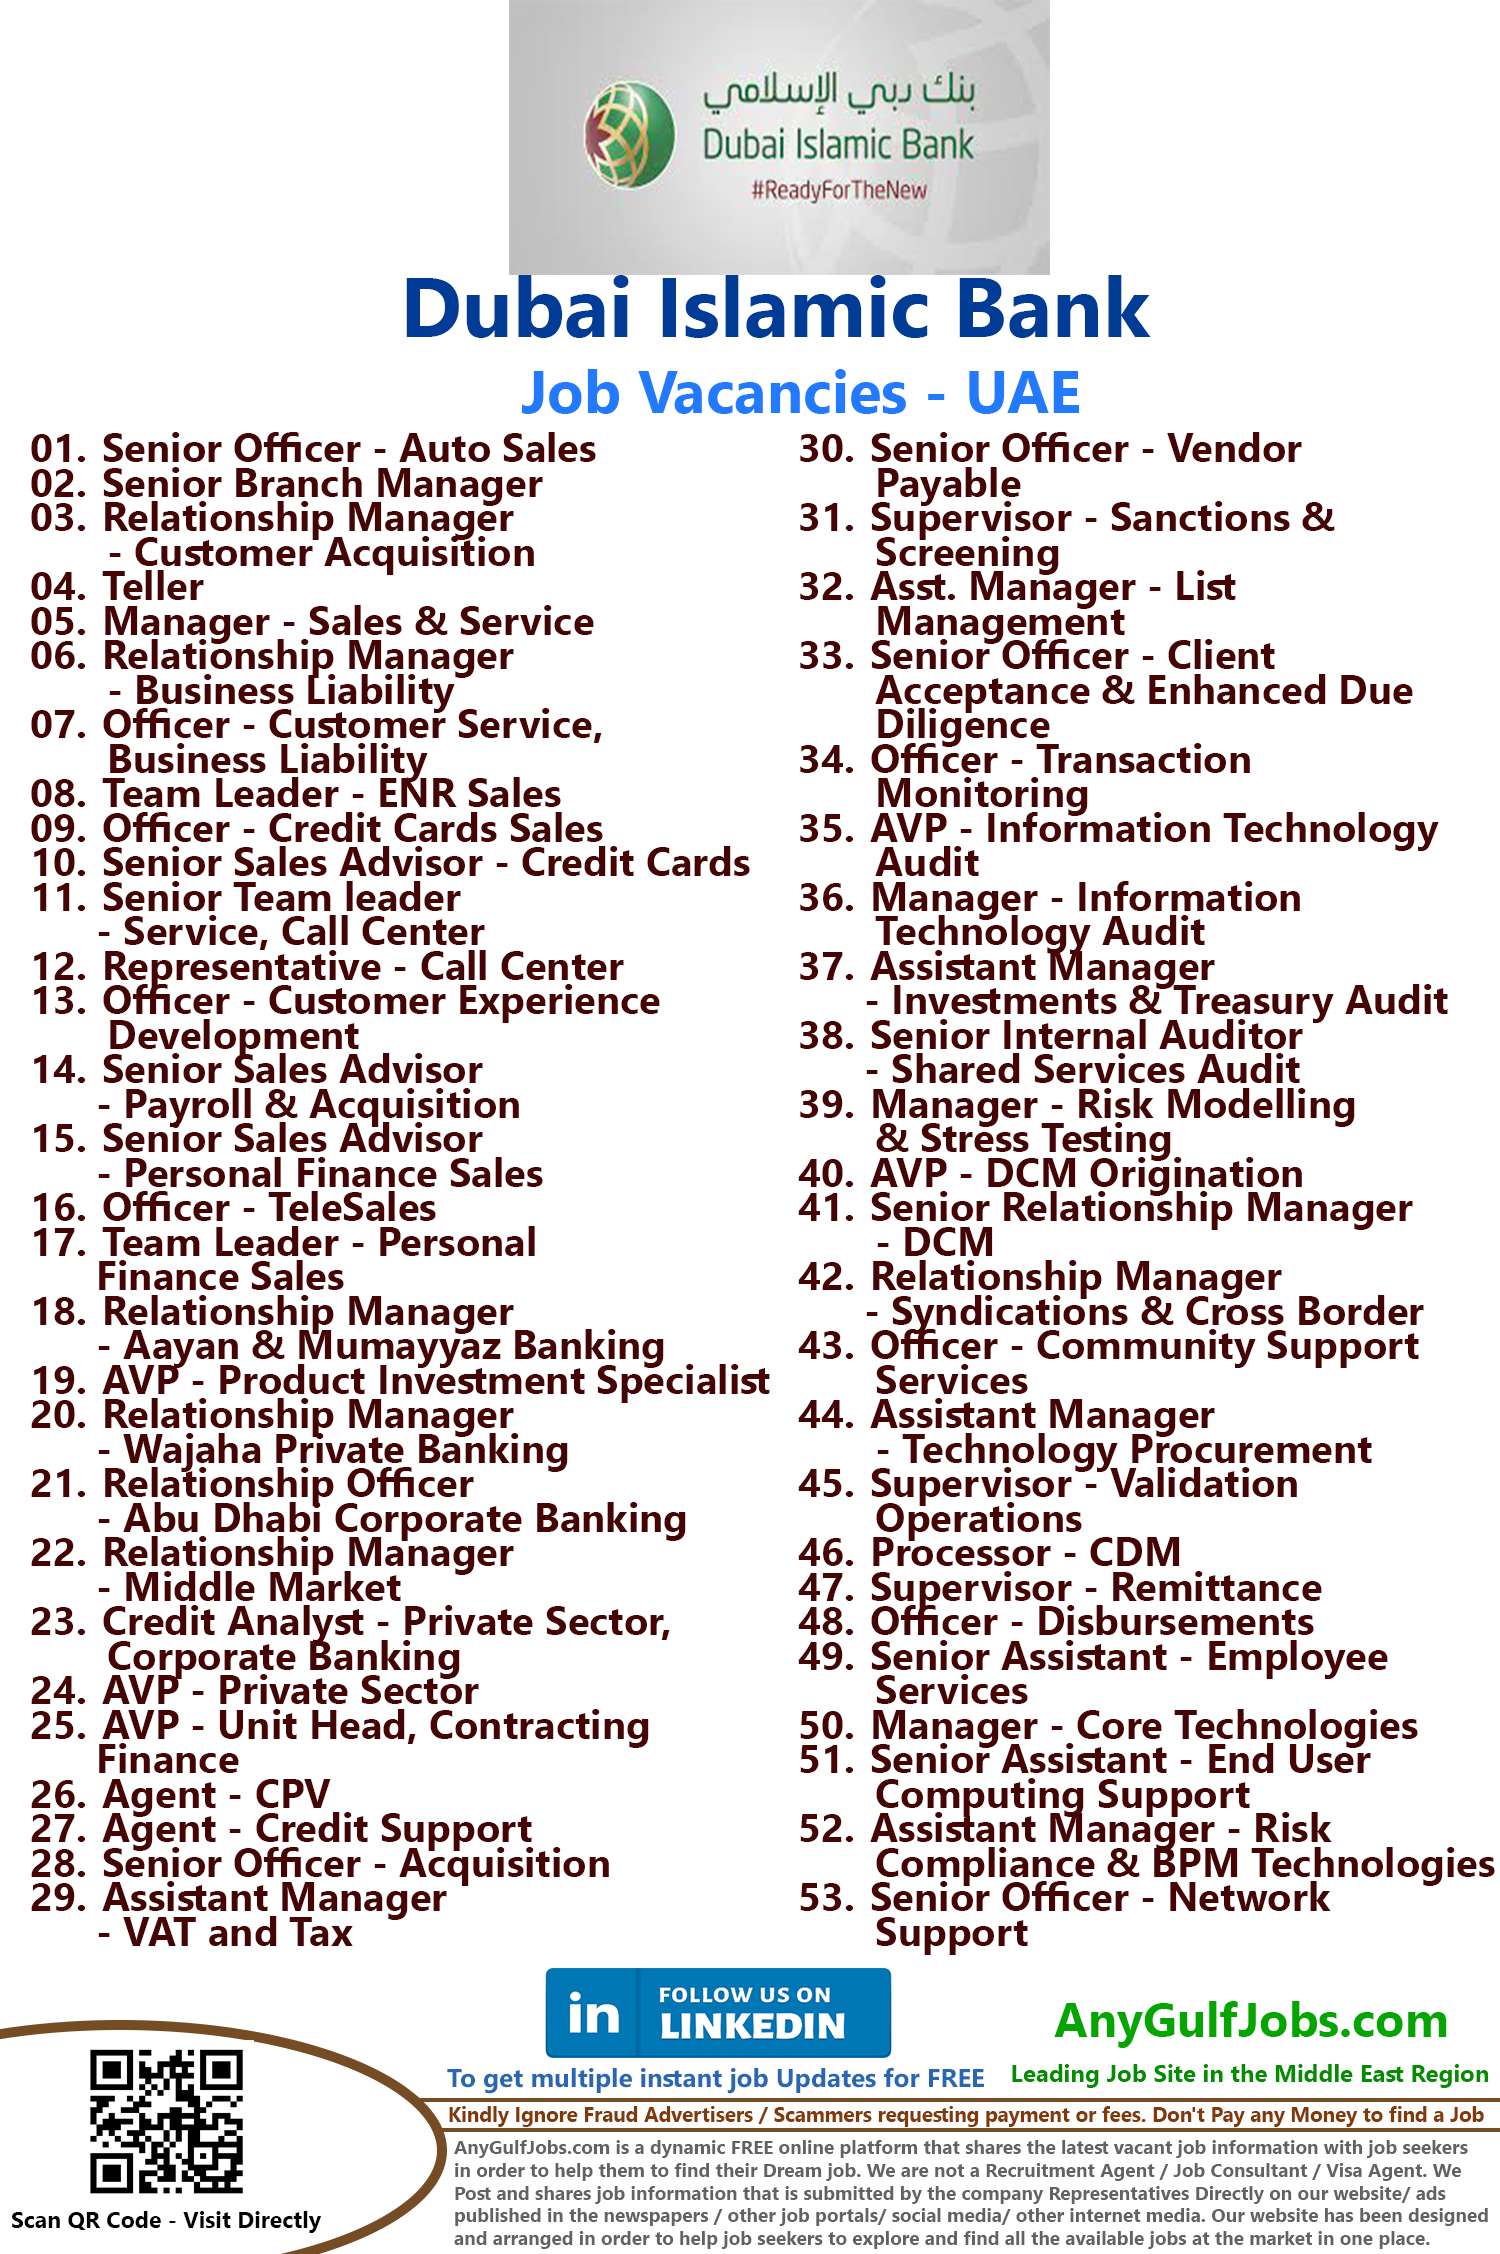 List of Dubai Islamic Bank Jobs - UAE